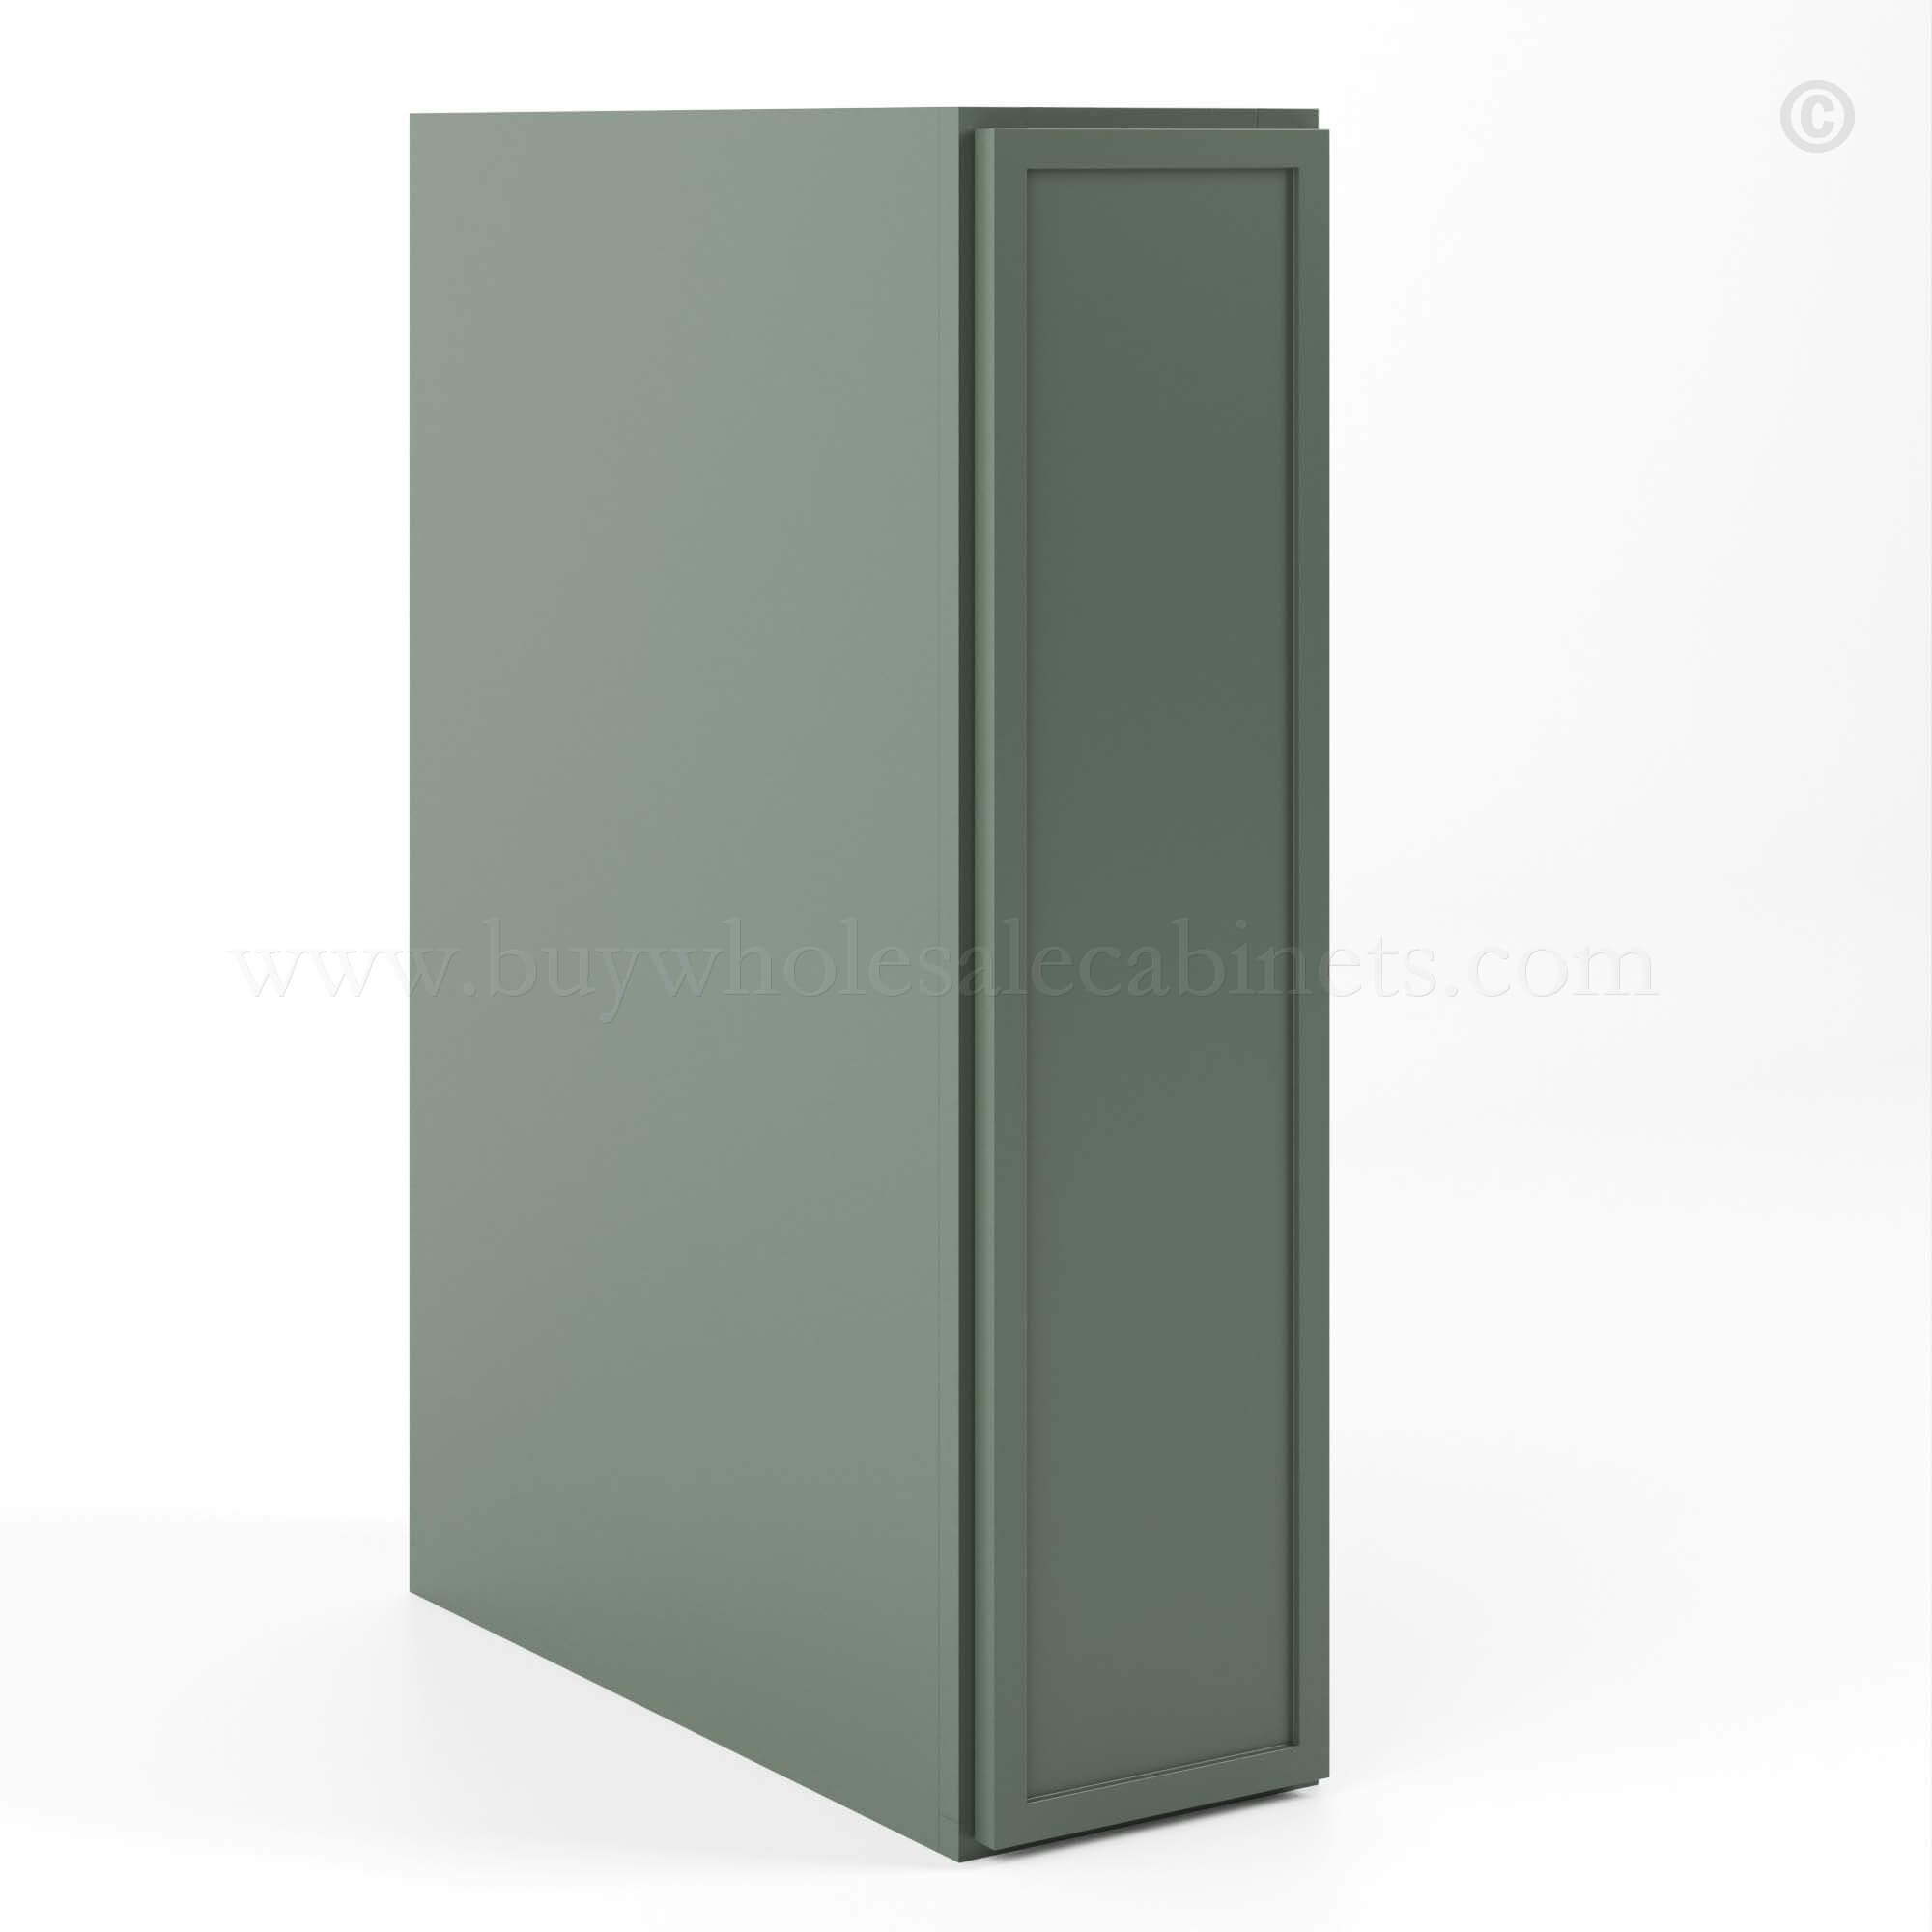 Slim Shaker Green Full Height Door Base Cabinets Single Door, rta cabinets, wholesale cabinets